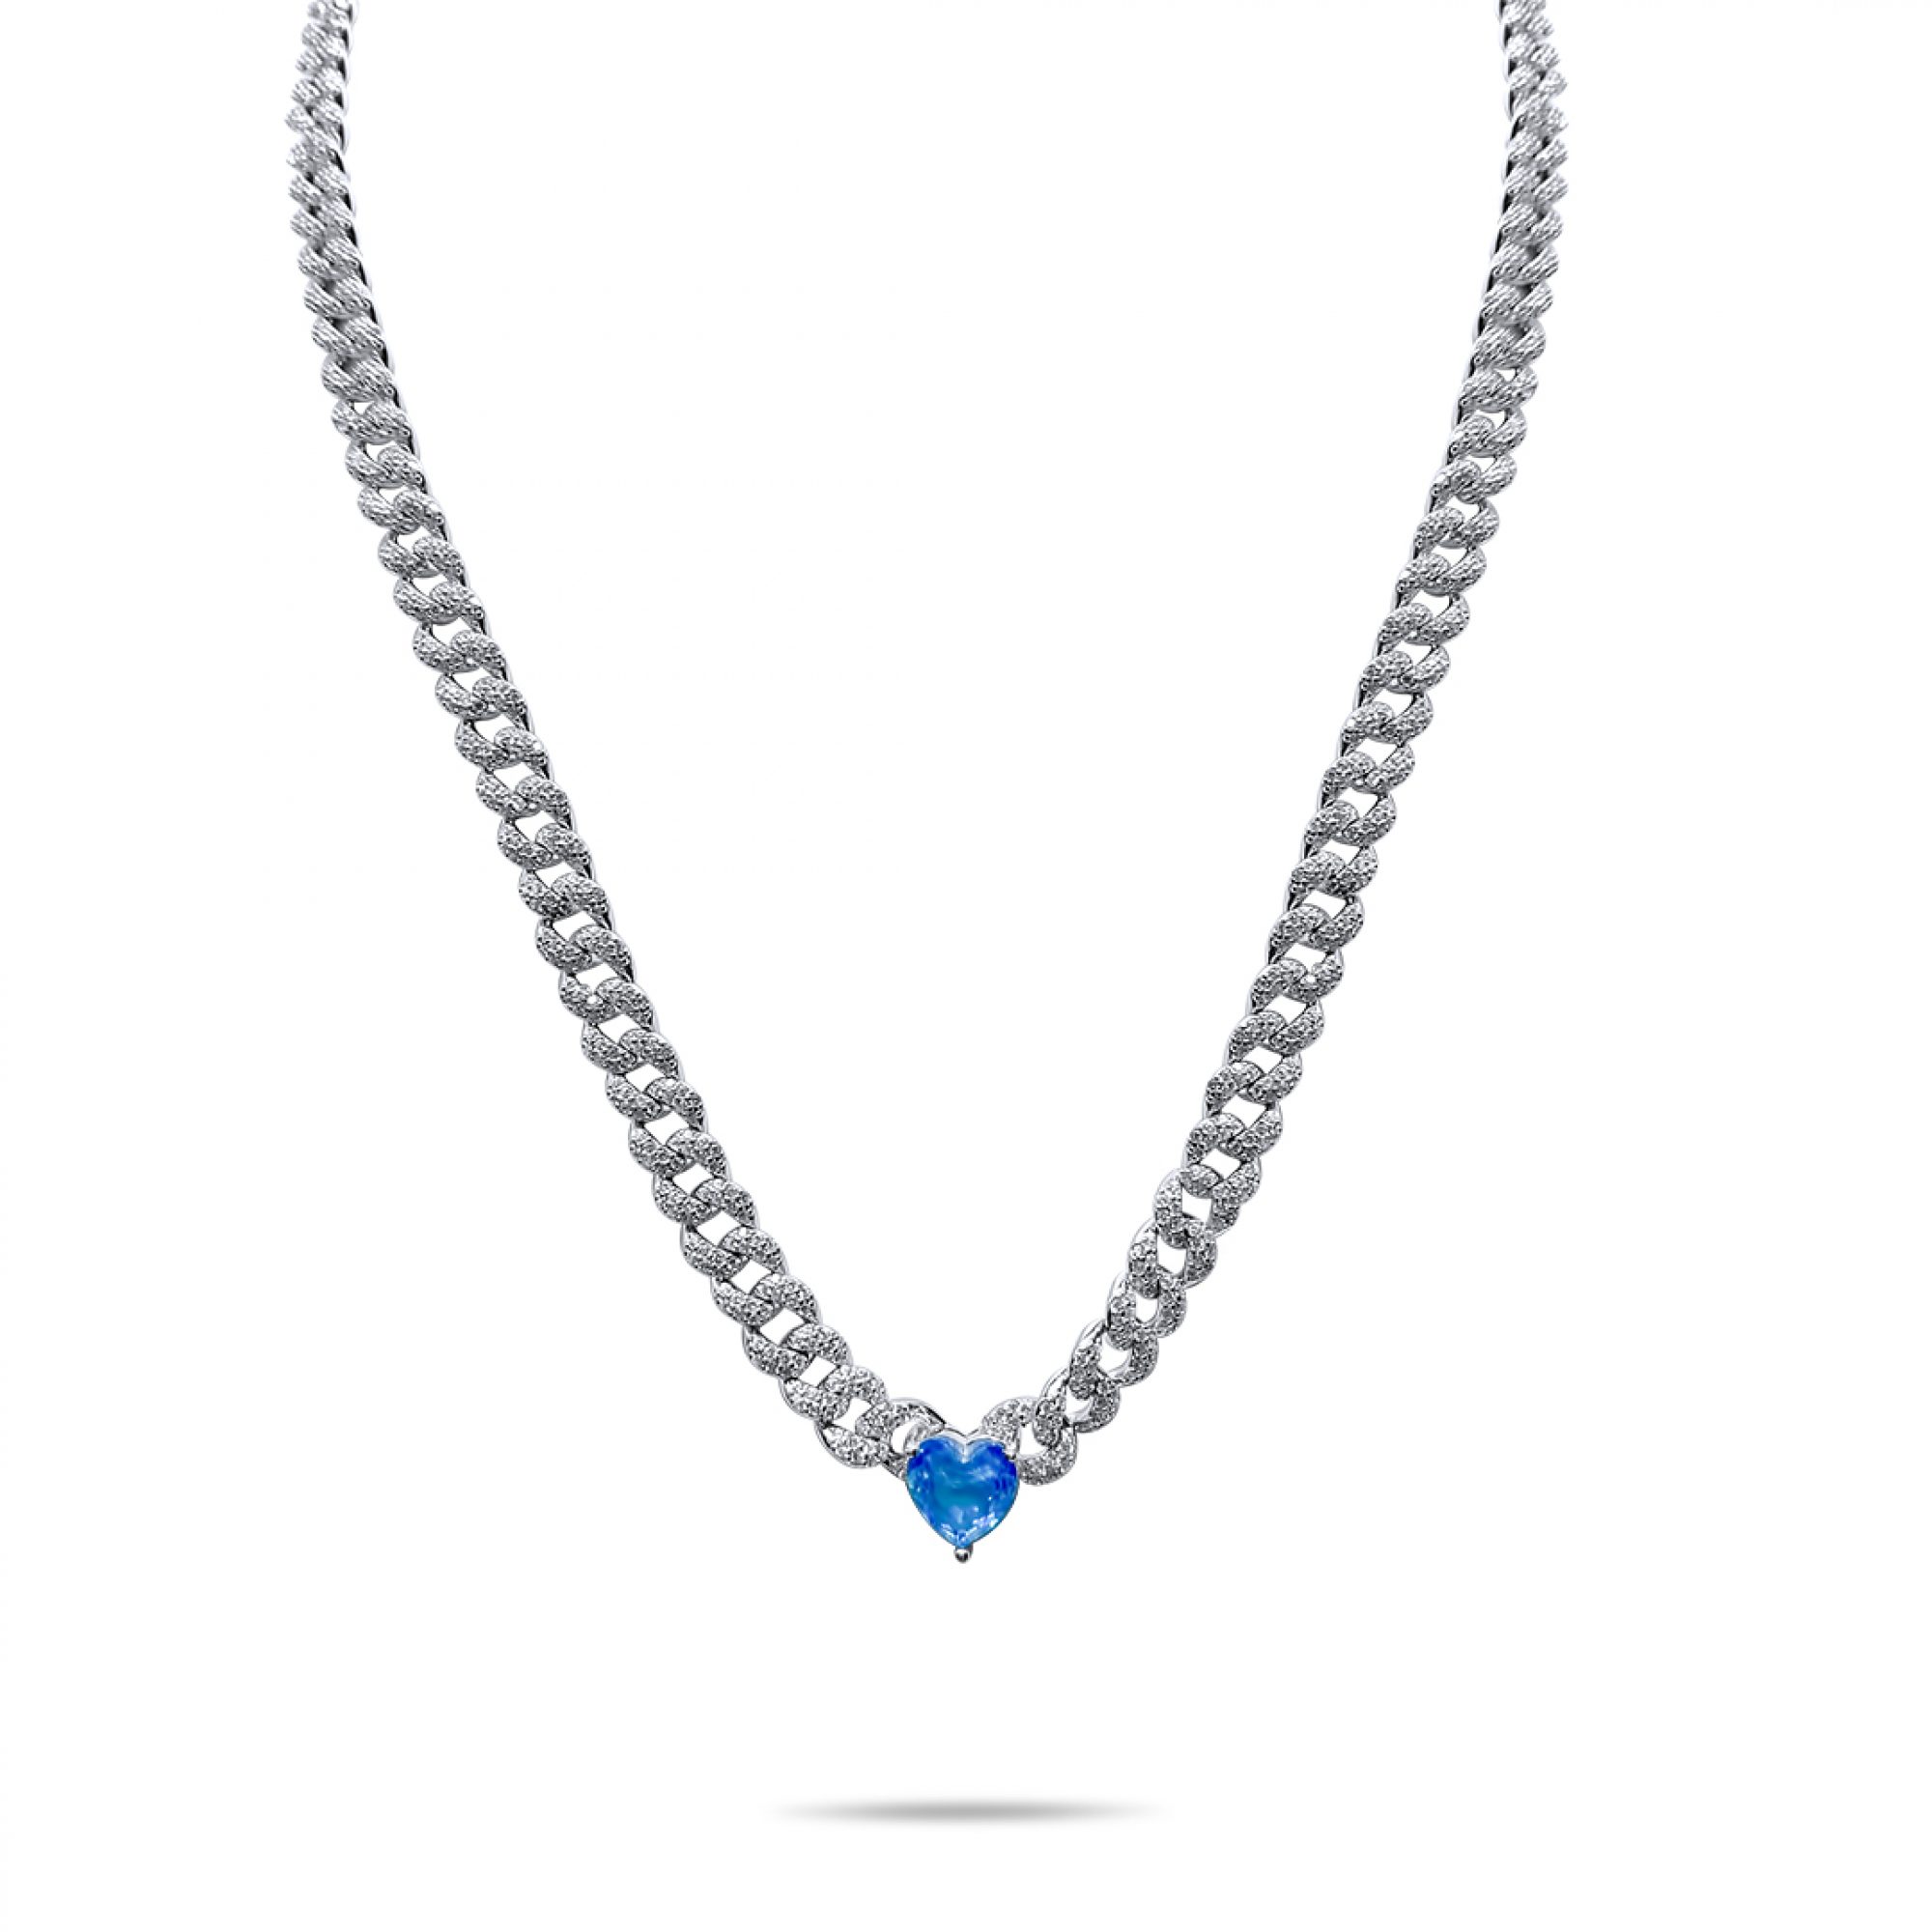 Silver chain with aquamarine and zircon stones